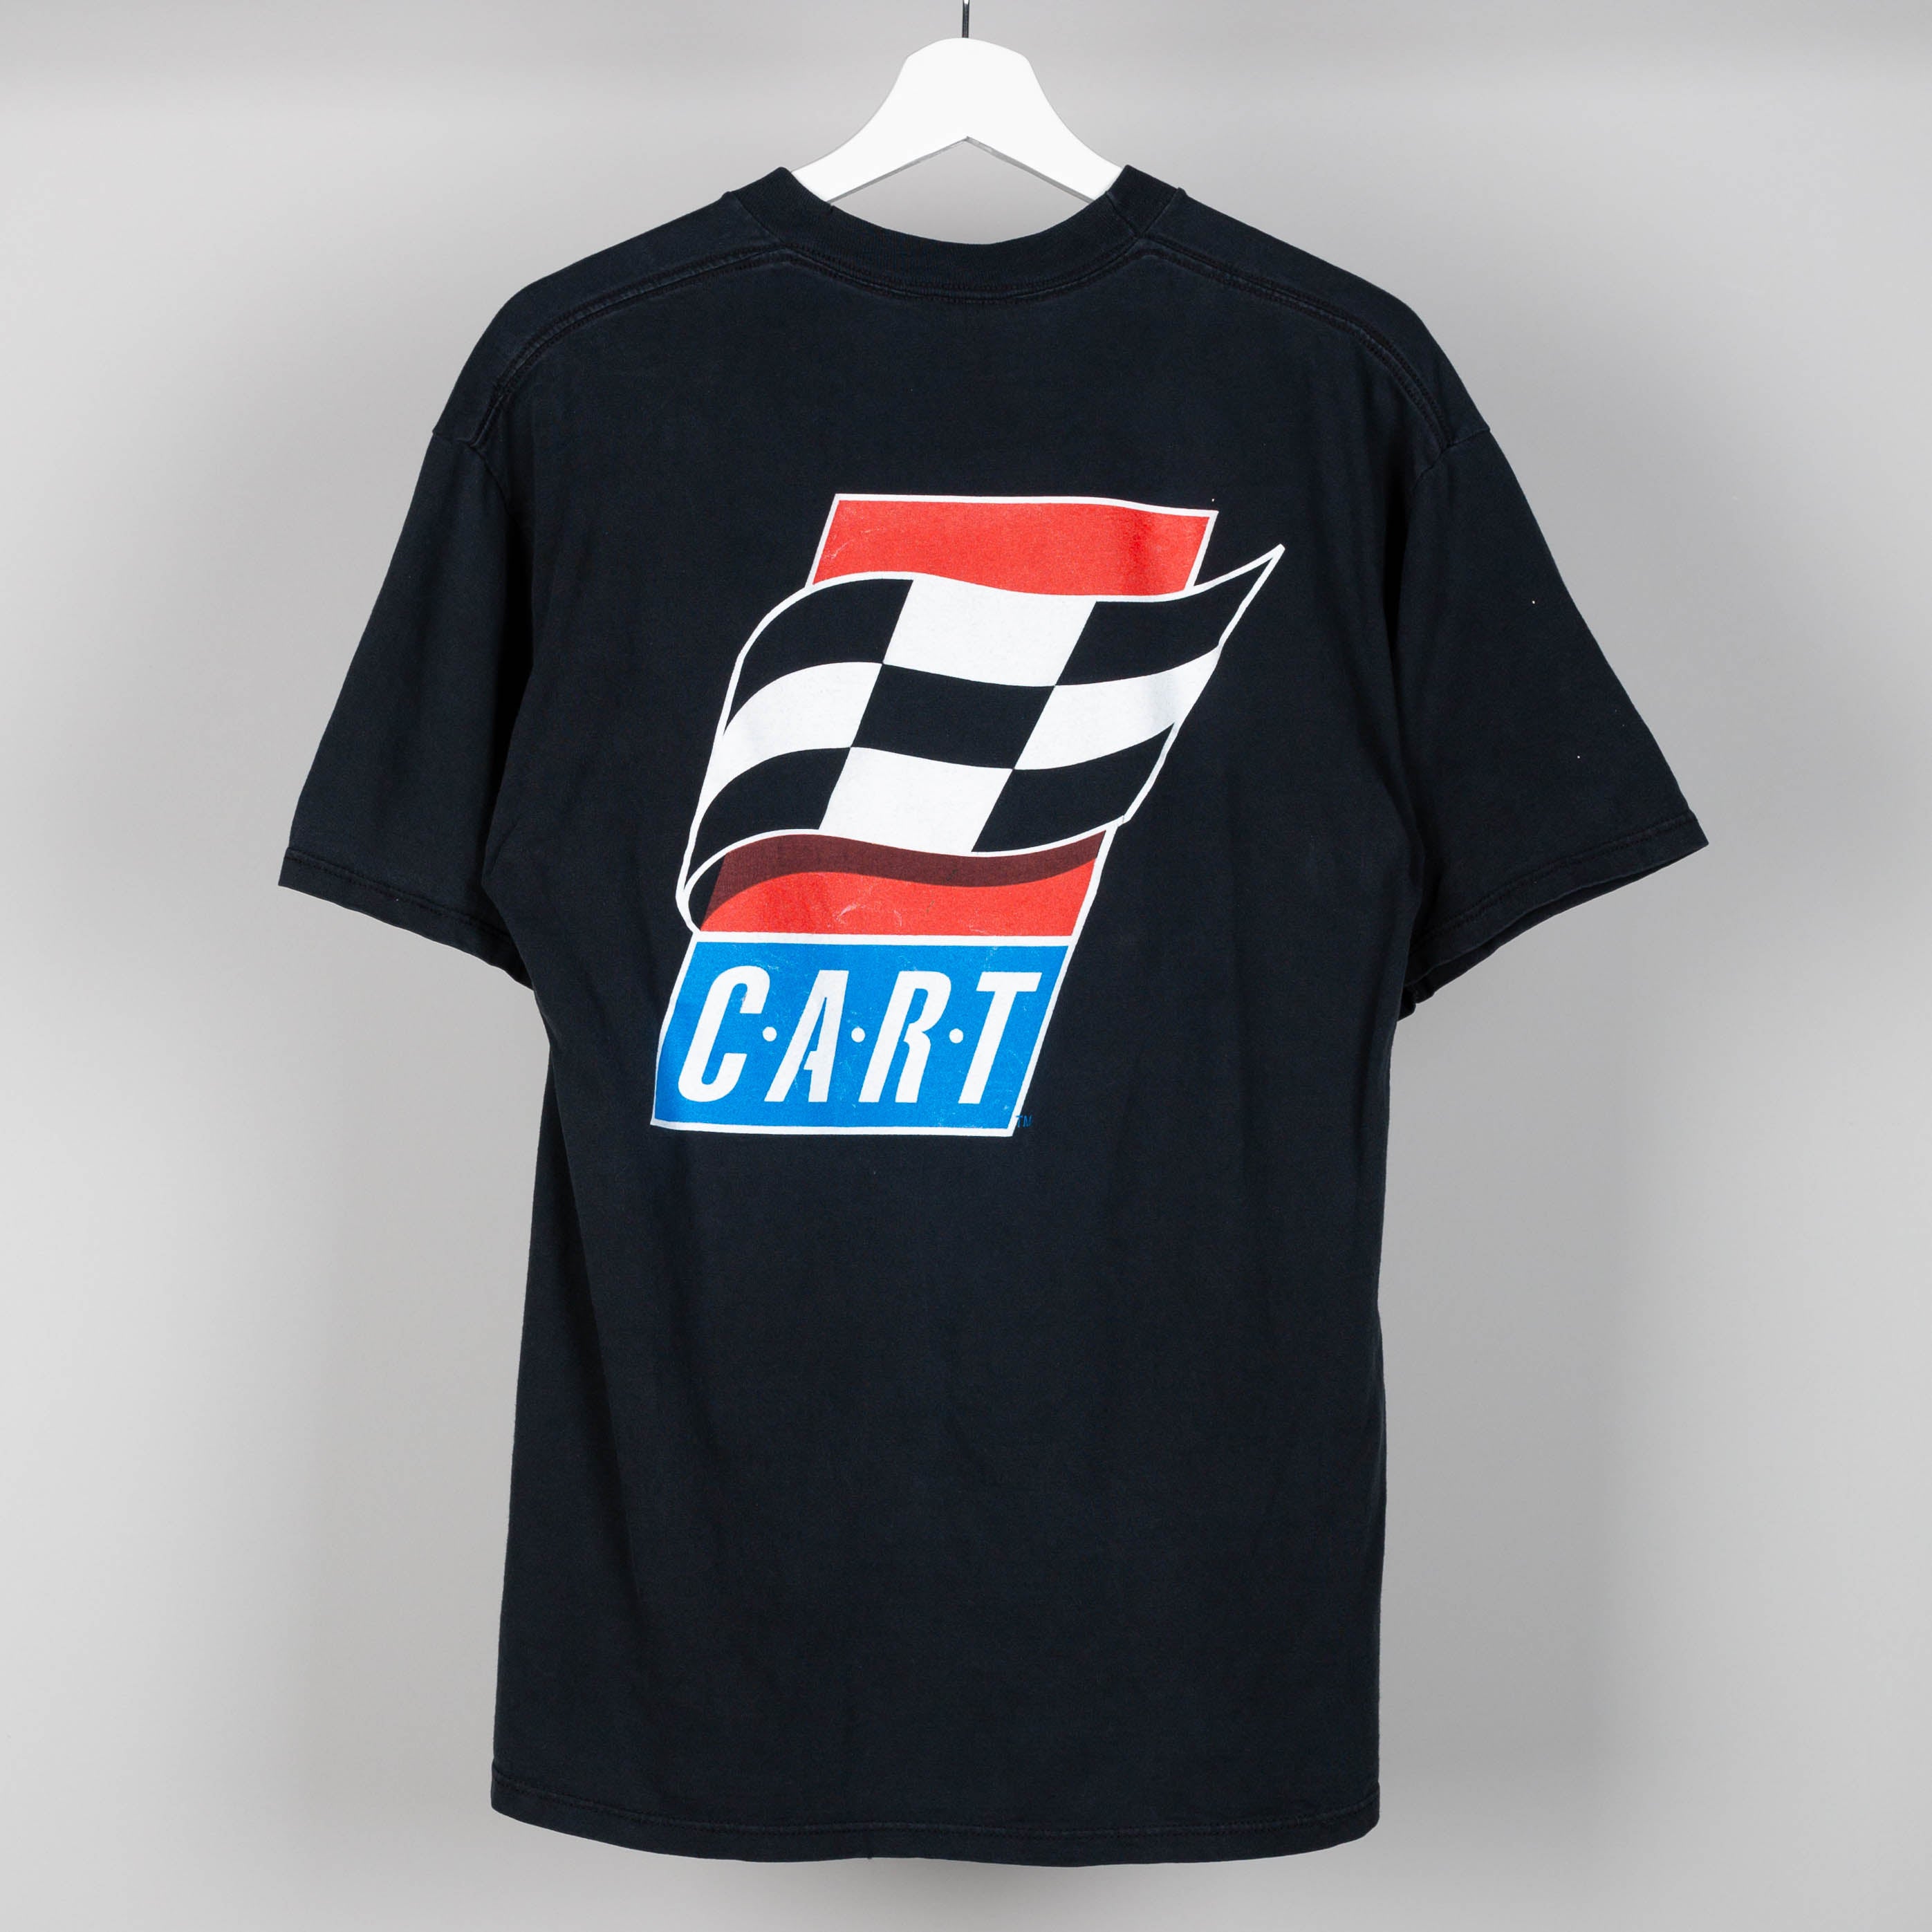 1997 Auto Racing Championship T-Shirt Size L